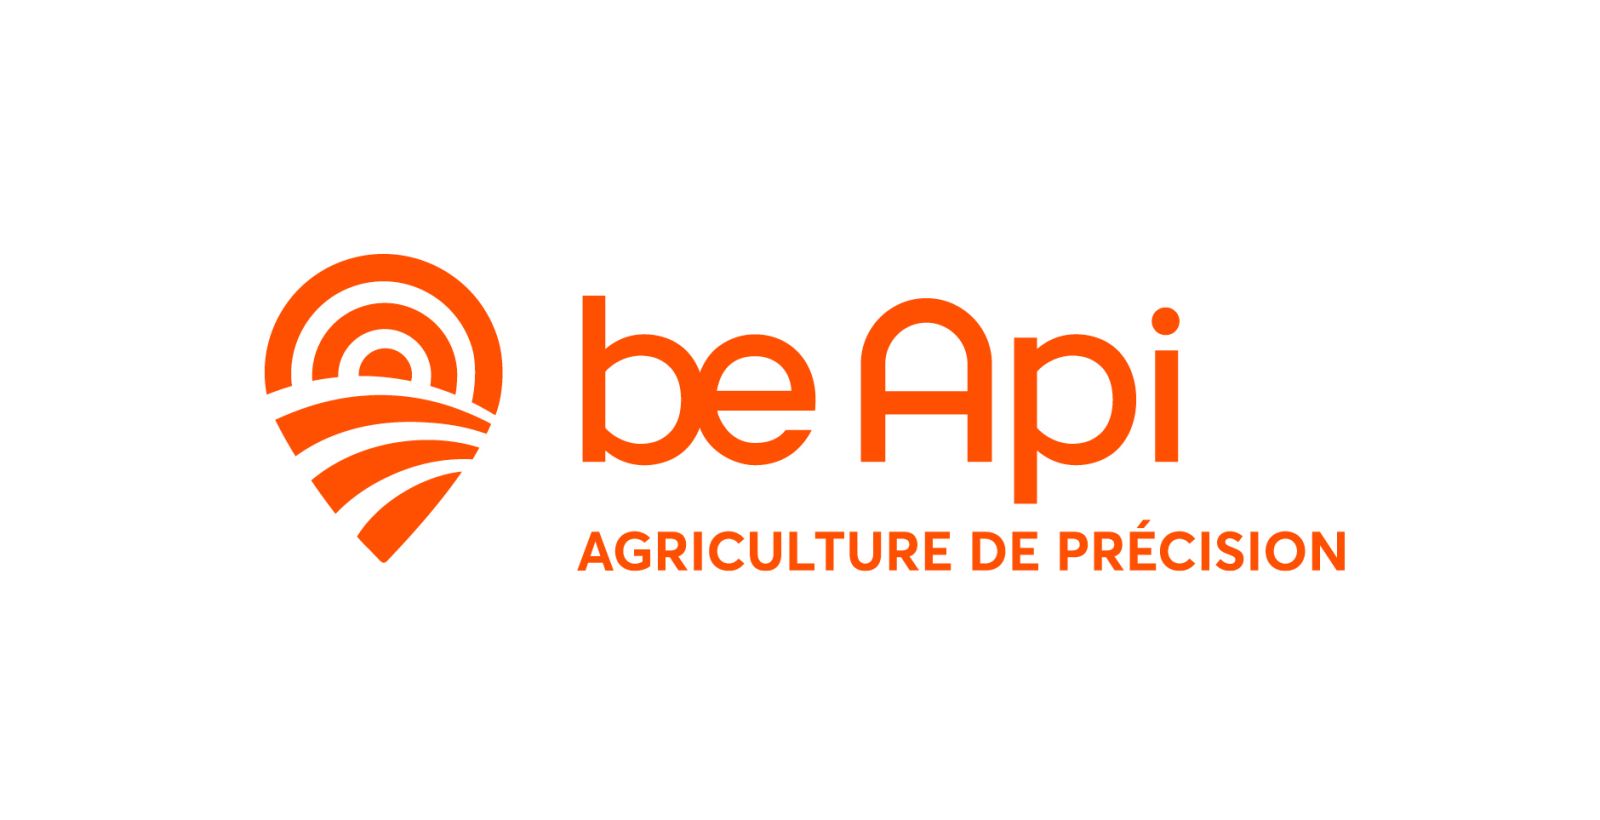 creative branding design of be api